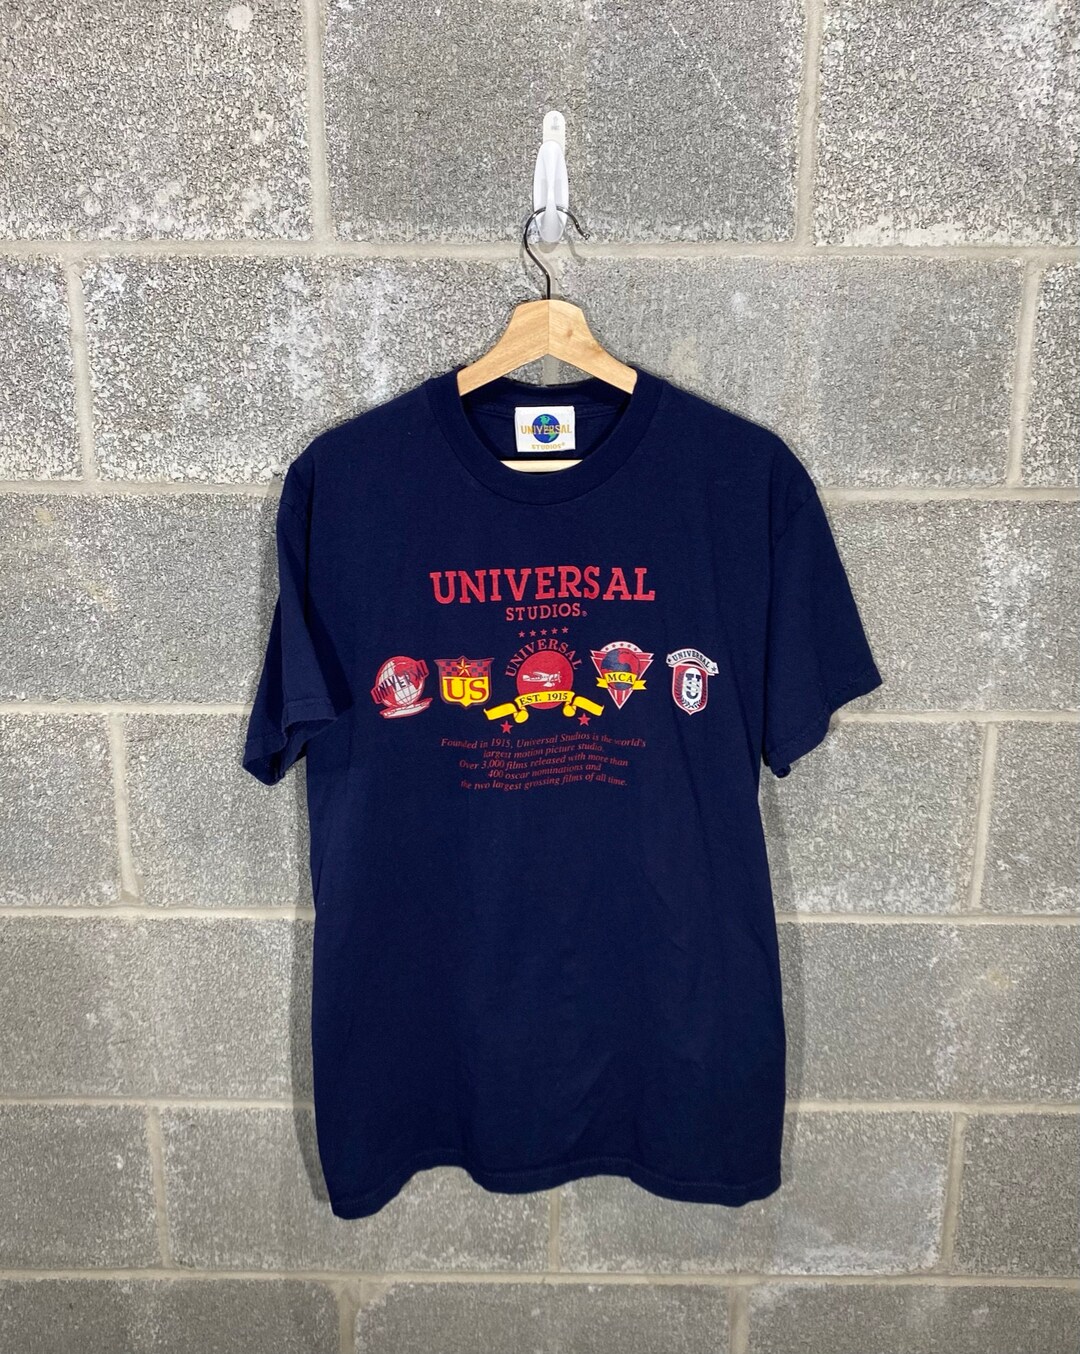 Vintage 1990s Universal Studios Navy Blue Graphic T-shirt - Etsy